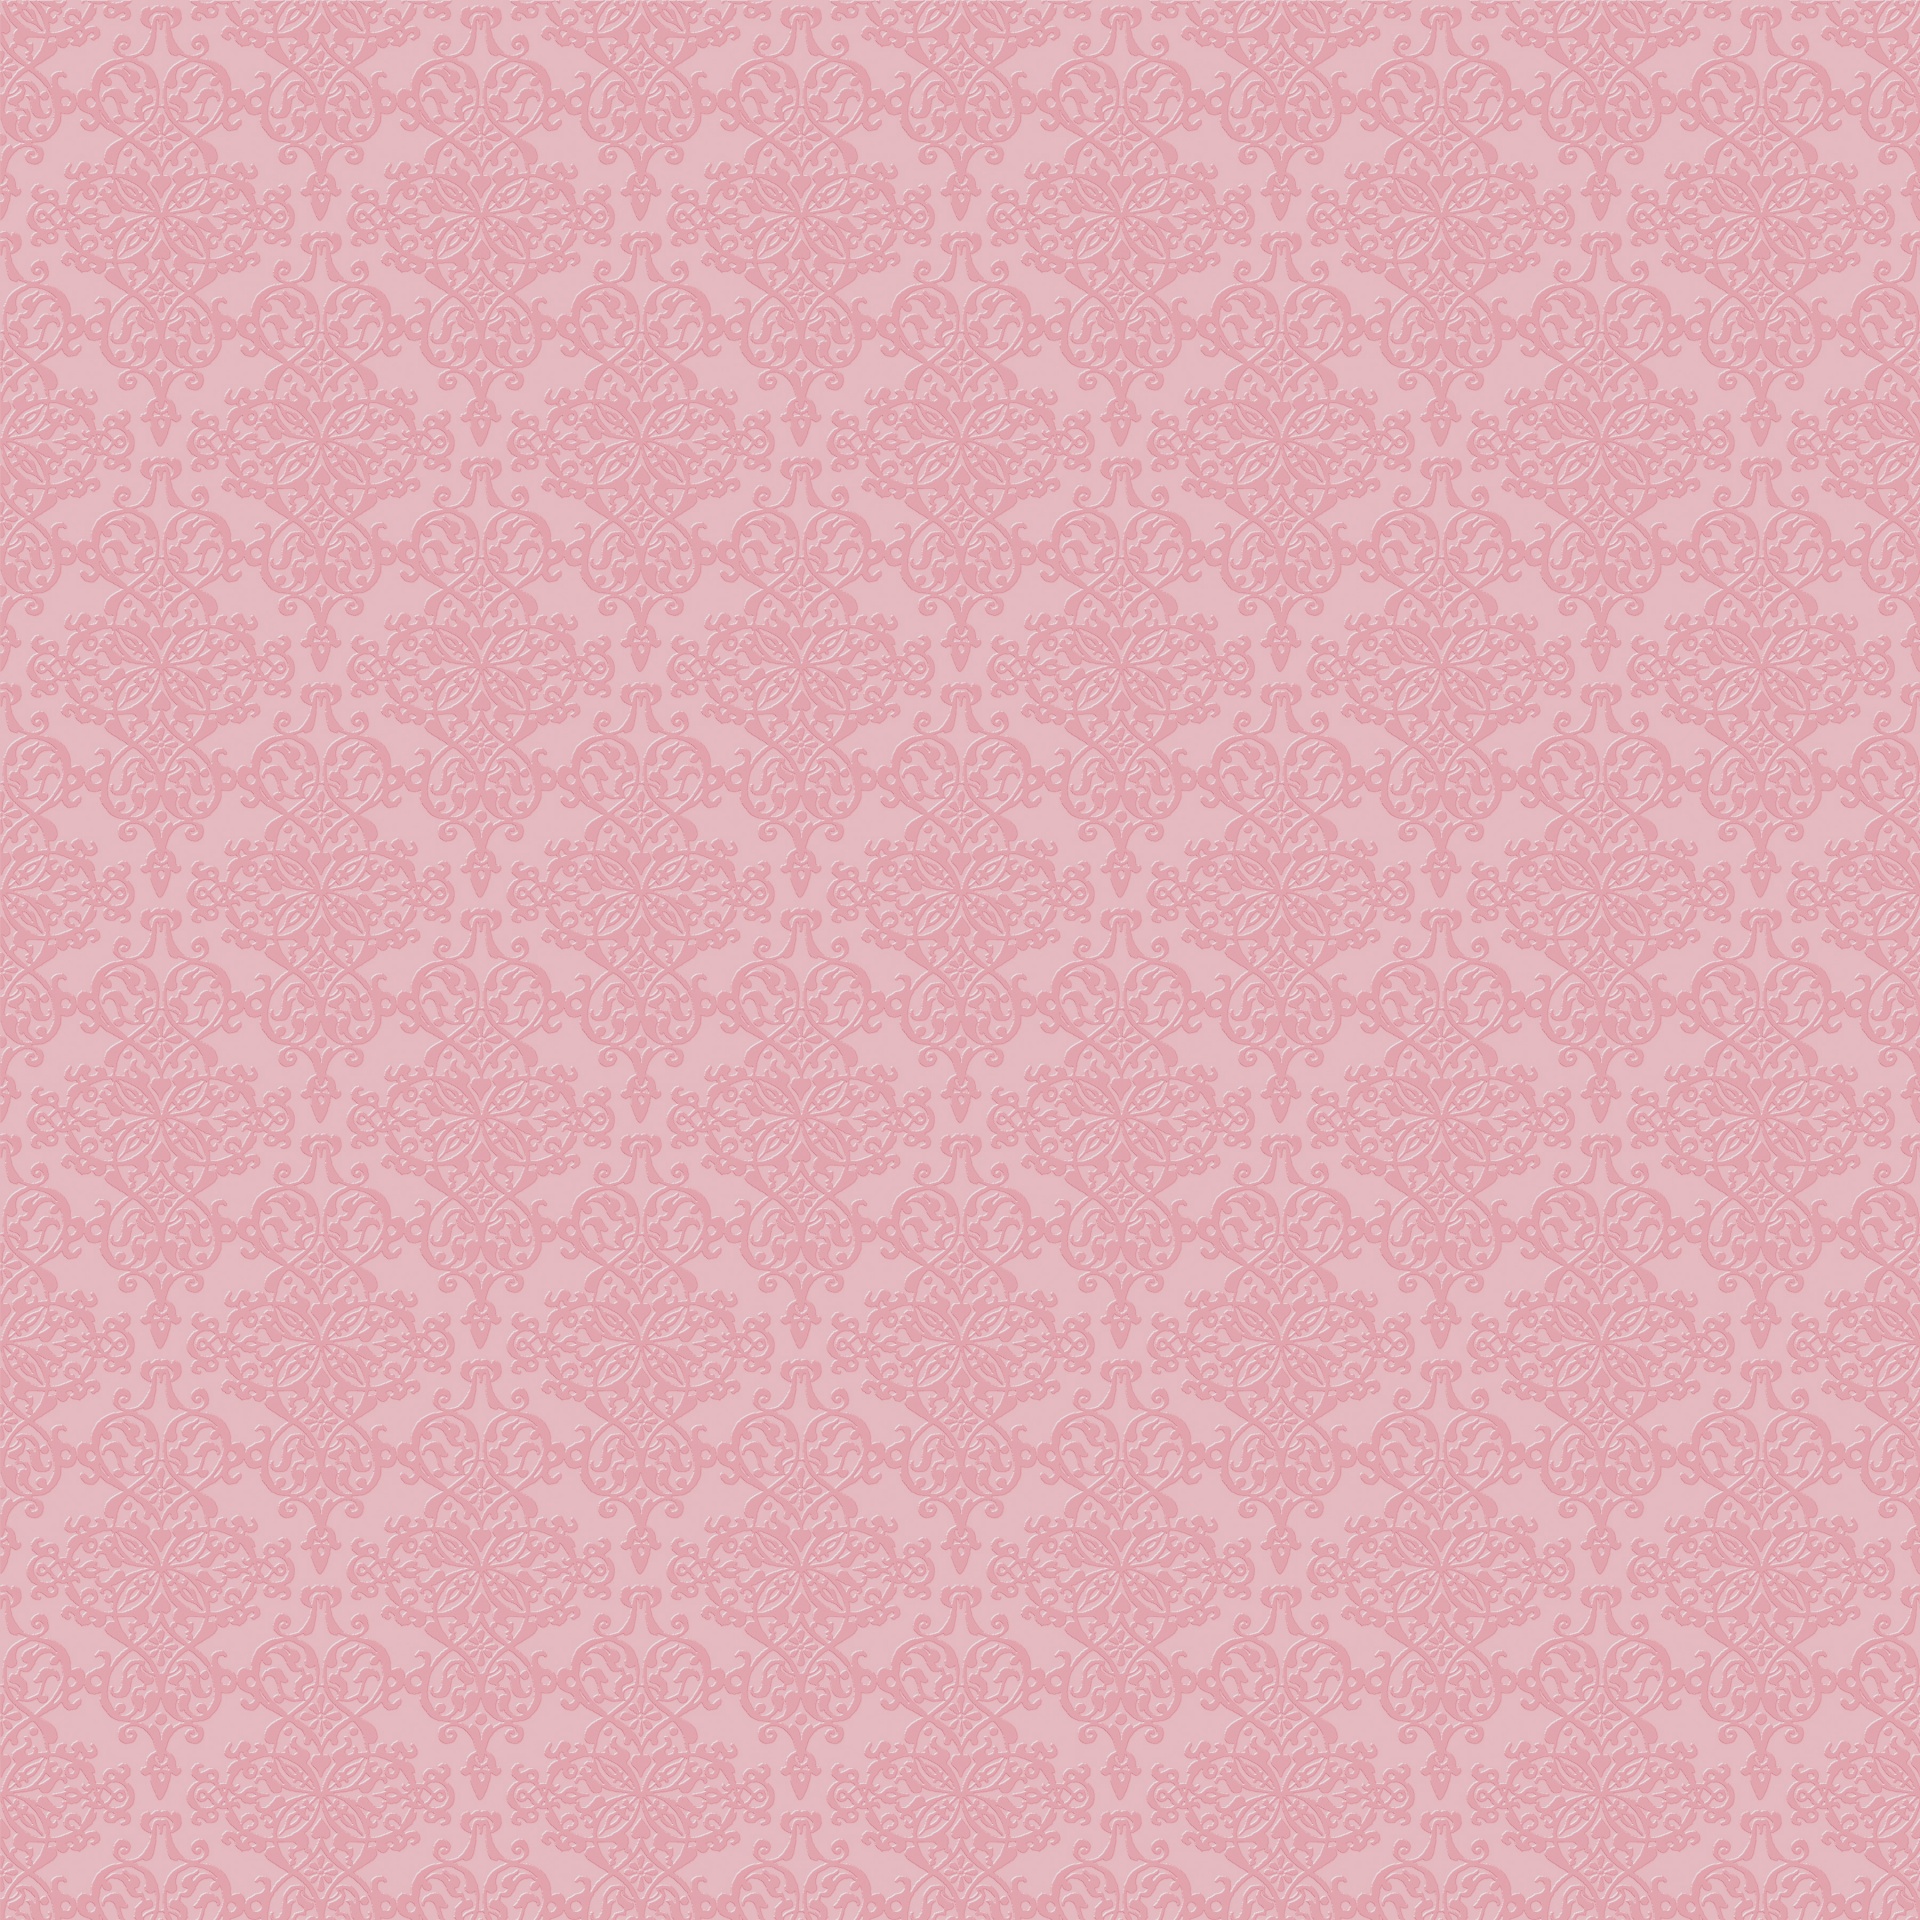 Dusky rose pink damask pattern wallpaper background